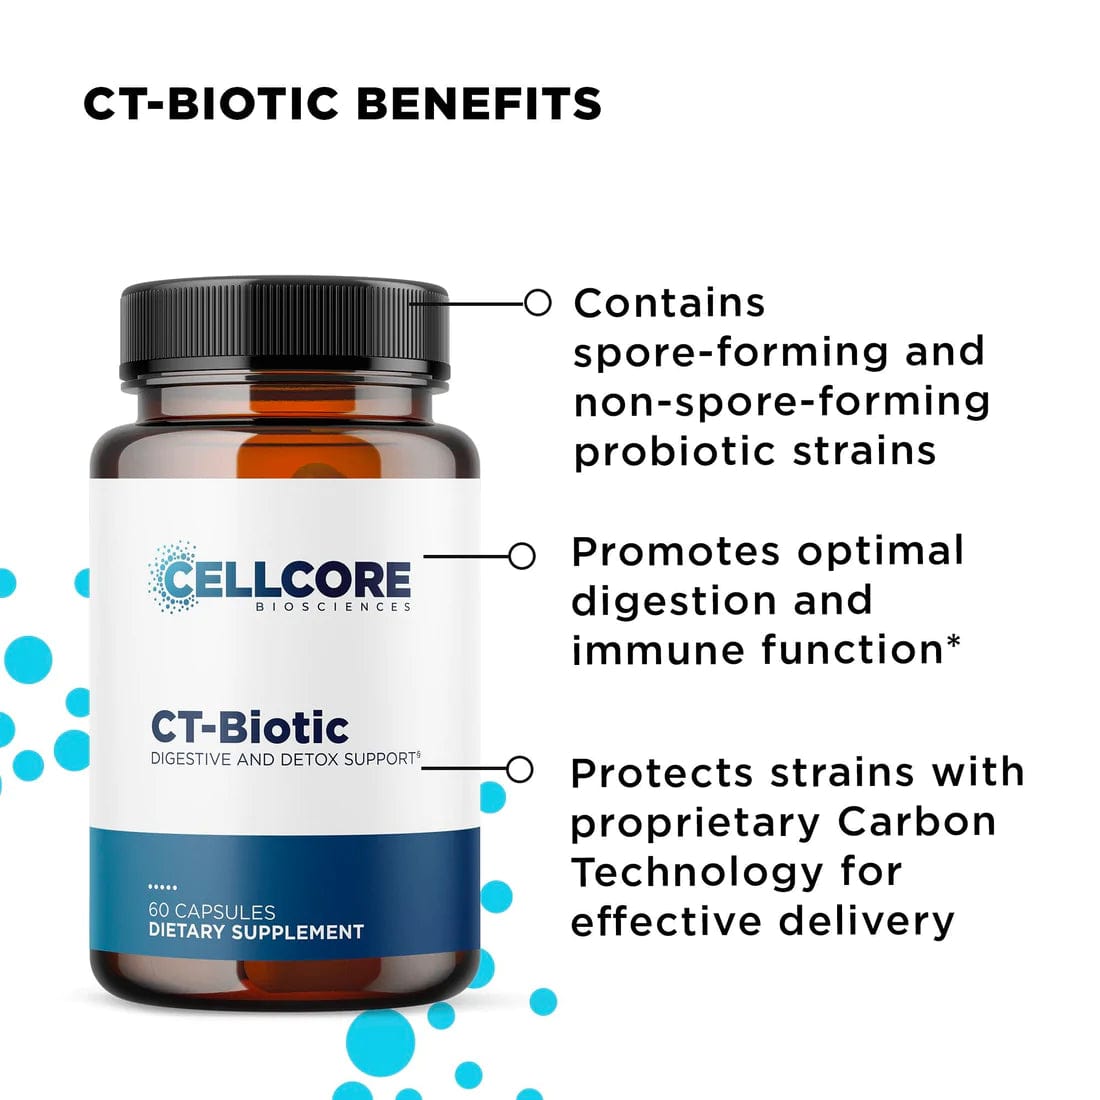 CellCore Biosciences Nutritional Detox Support Kit by CellCore Biosciences